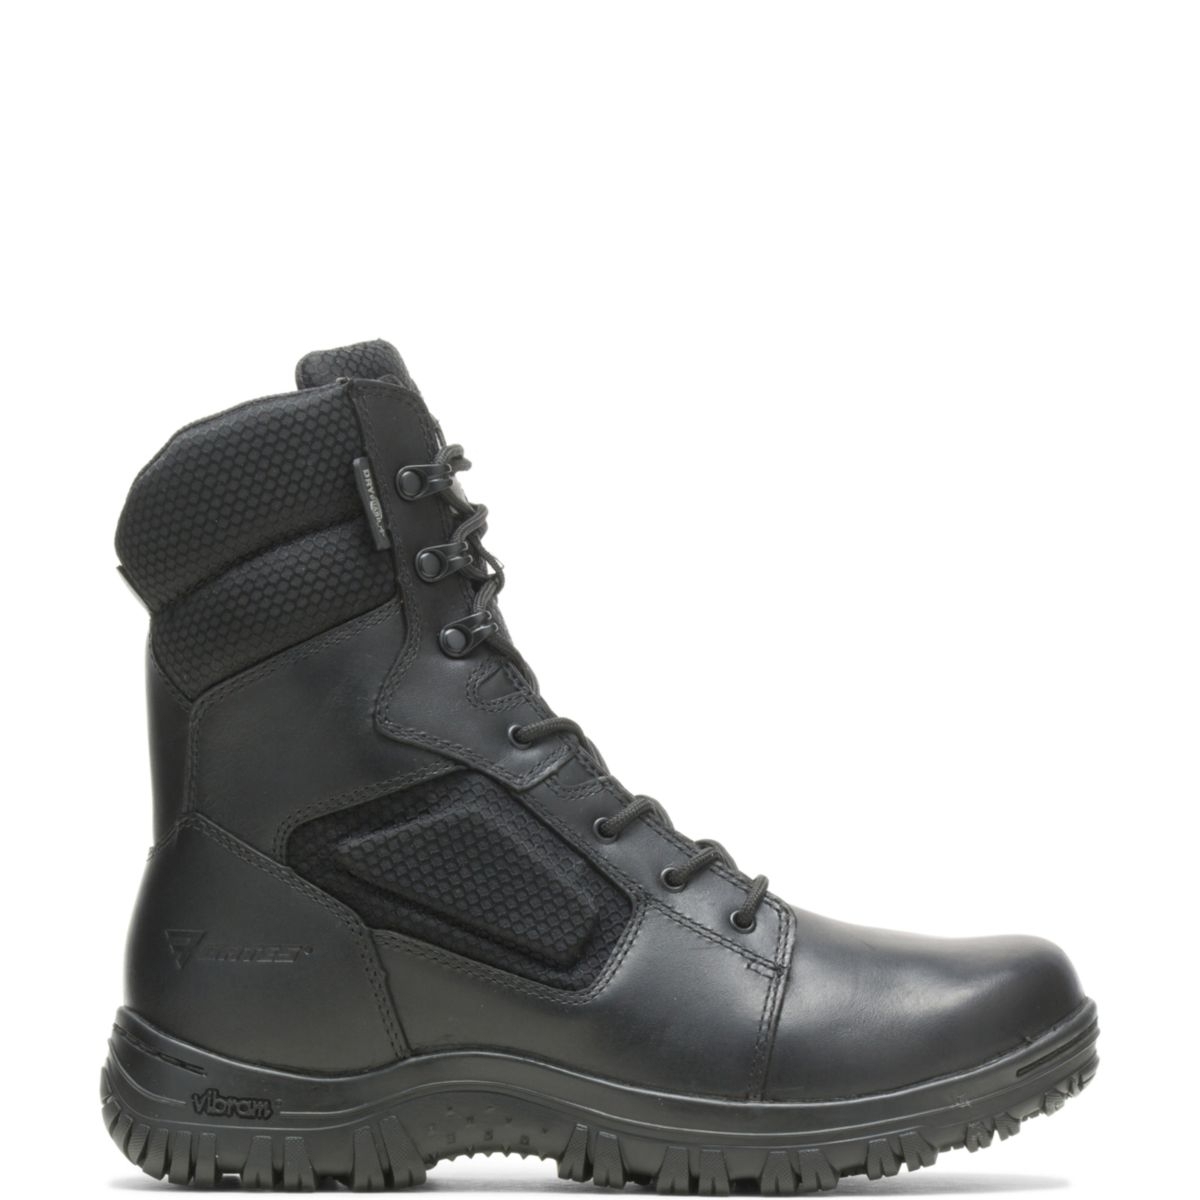 Bates Men's Maneuver 8-inch DryGuard Waterproof Side-Zip Boot Black - E05508 BLACK - BLACK, 3